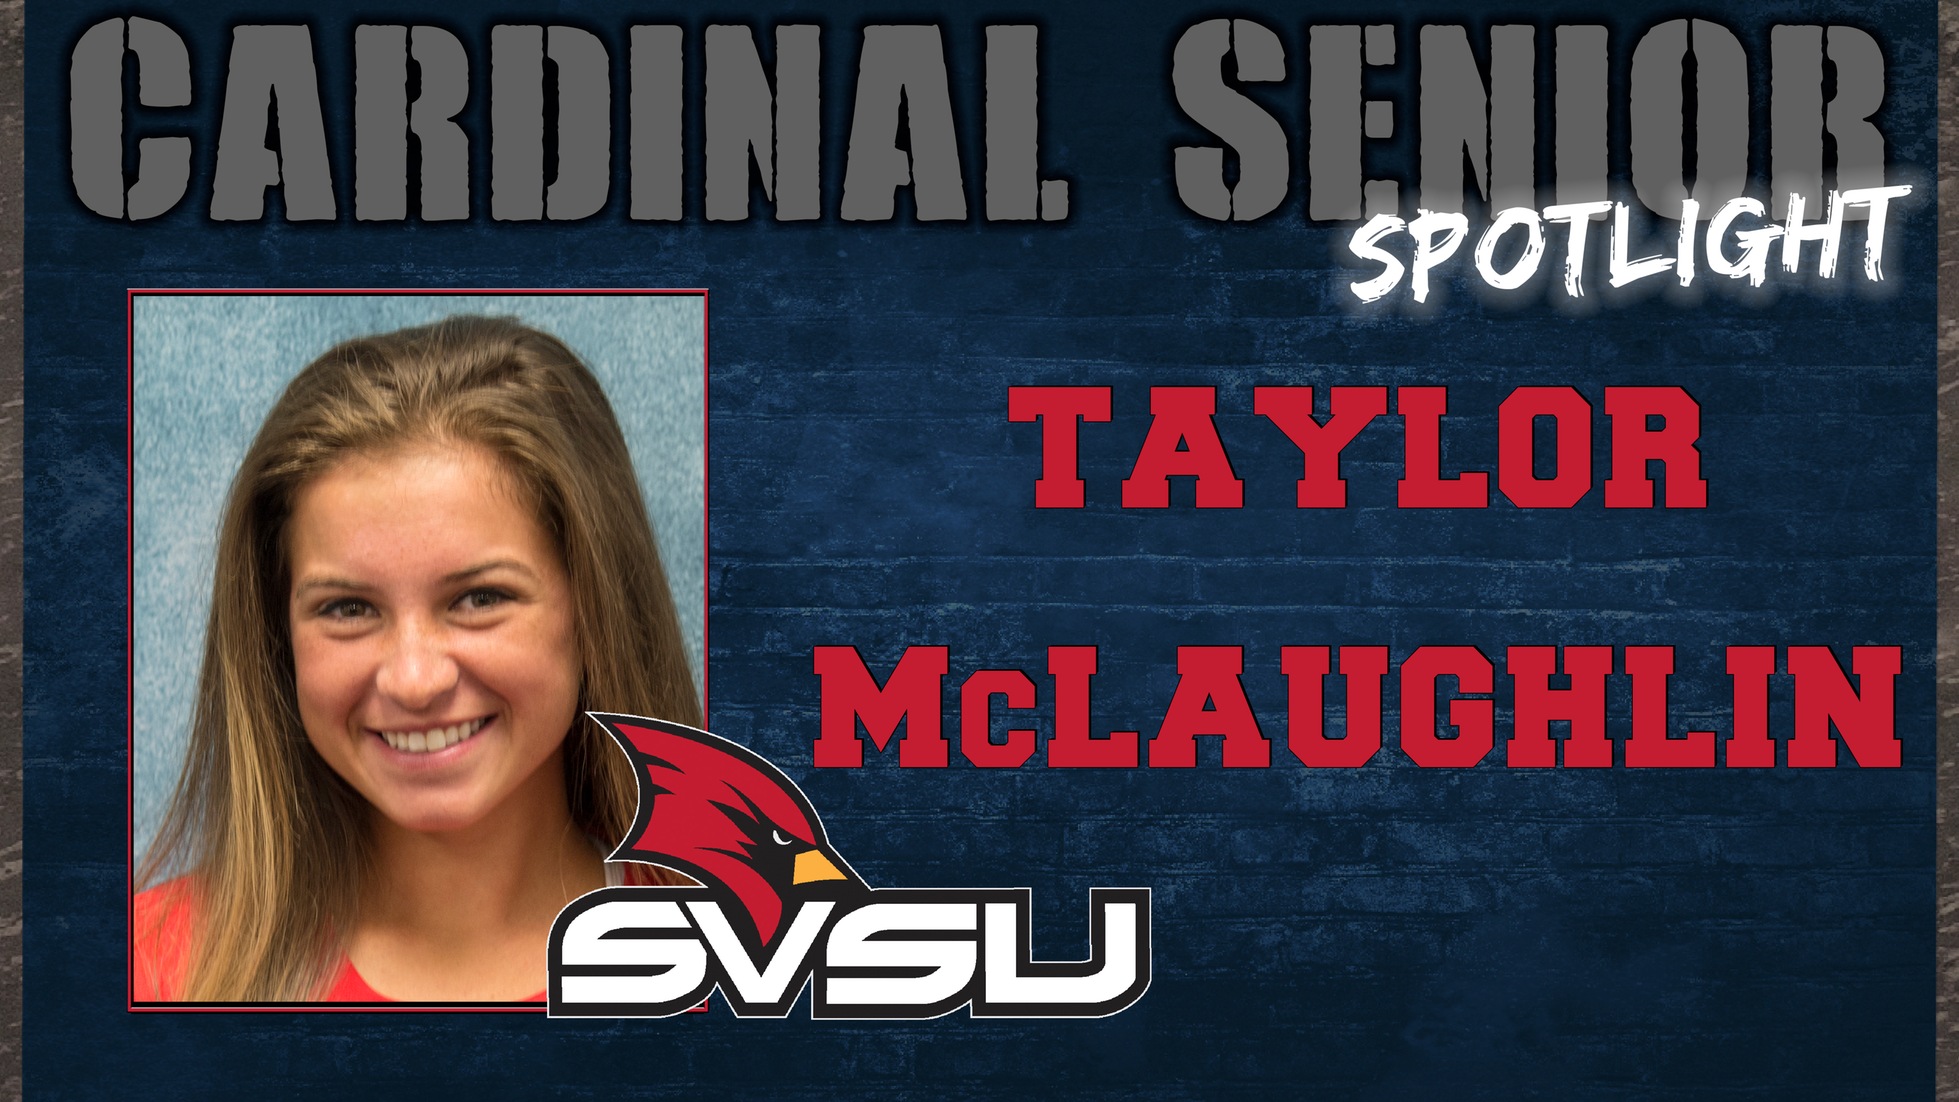 SVSU Cardinal Senior Spotlight - Taylor McLaughlin